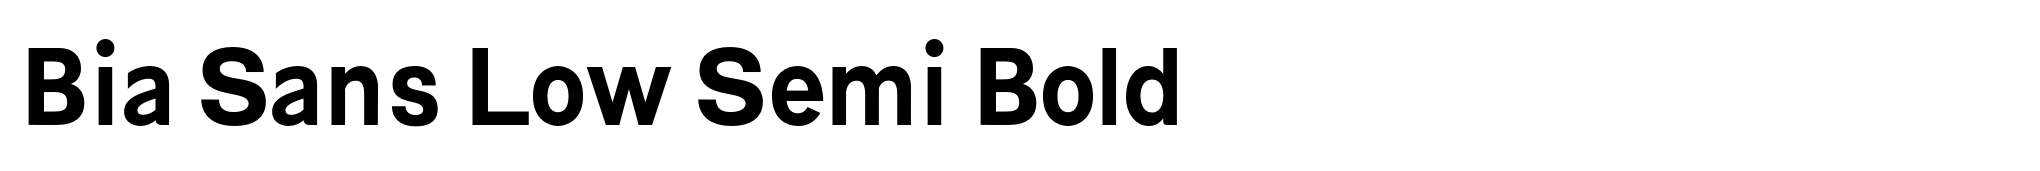 Bia Sans Low Semi Bold image